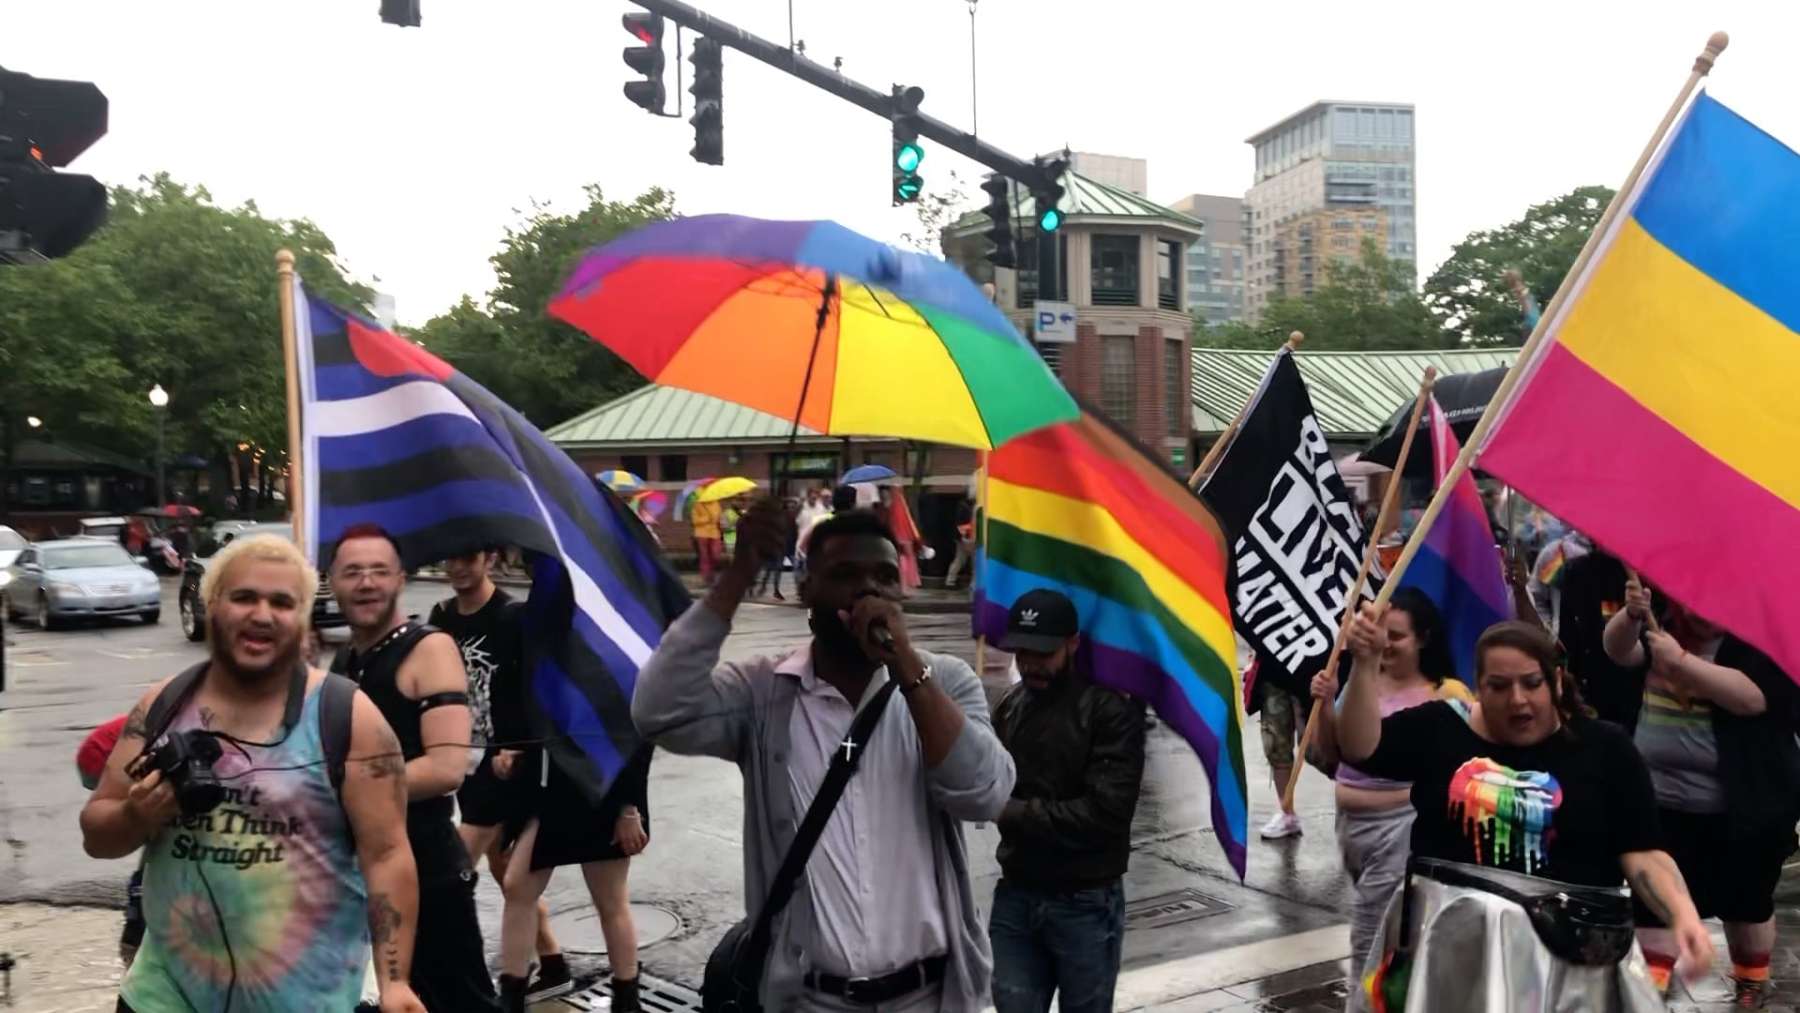 Providence Pride Flag raising was no small celebration